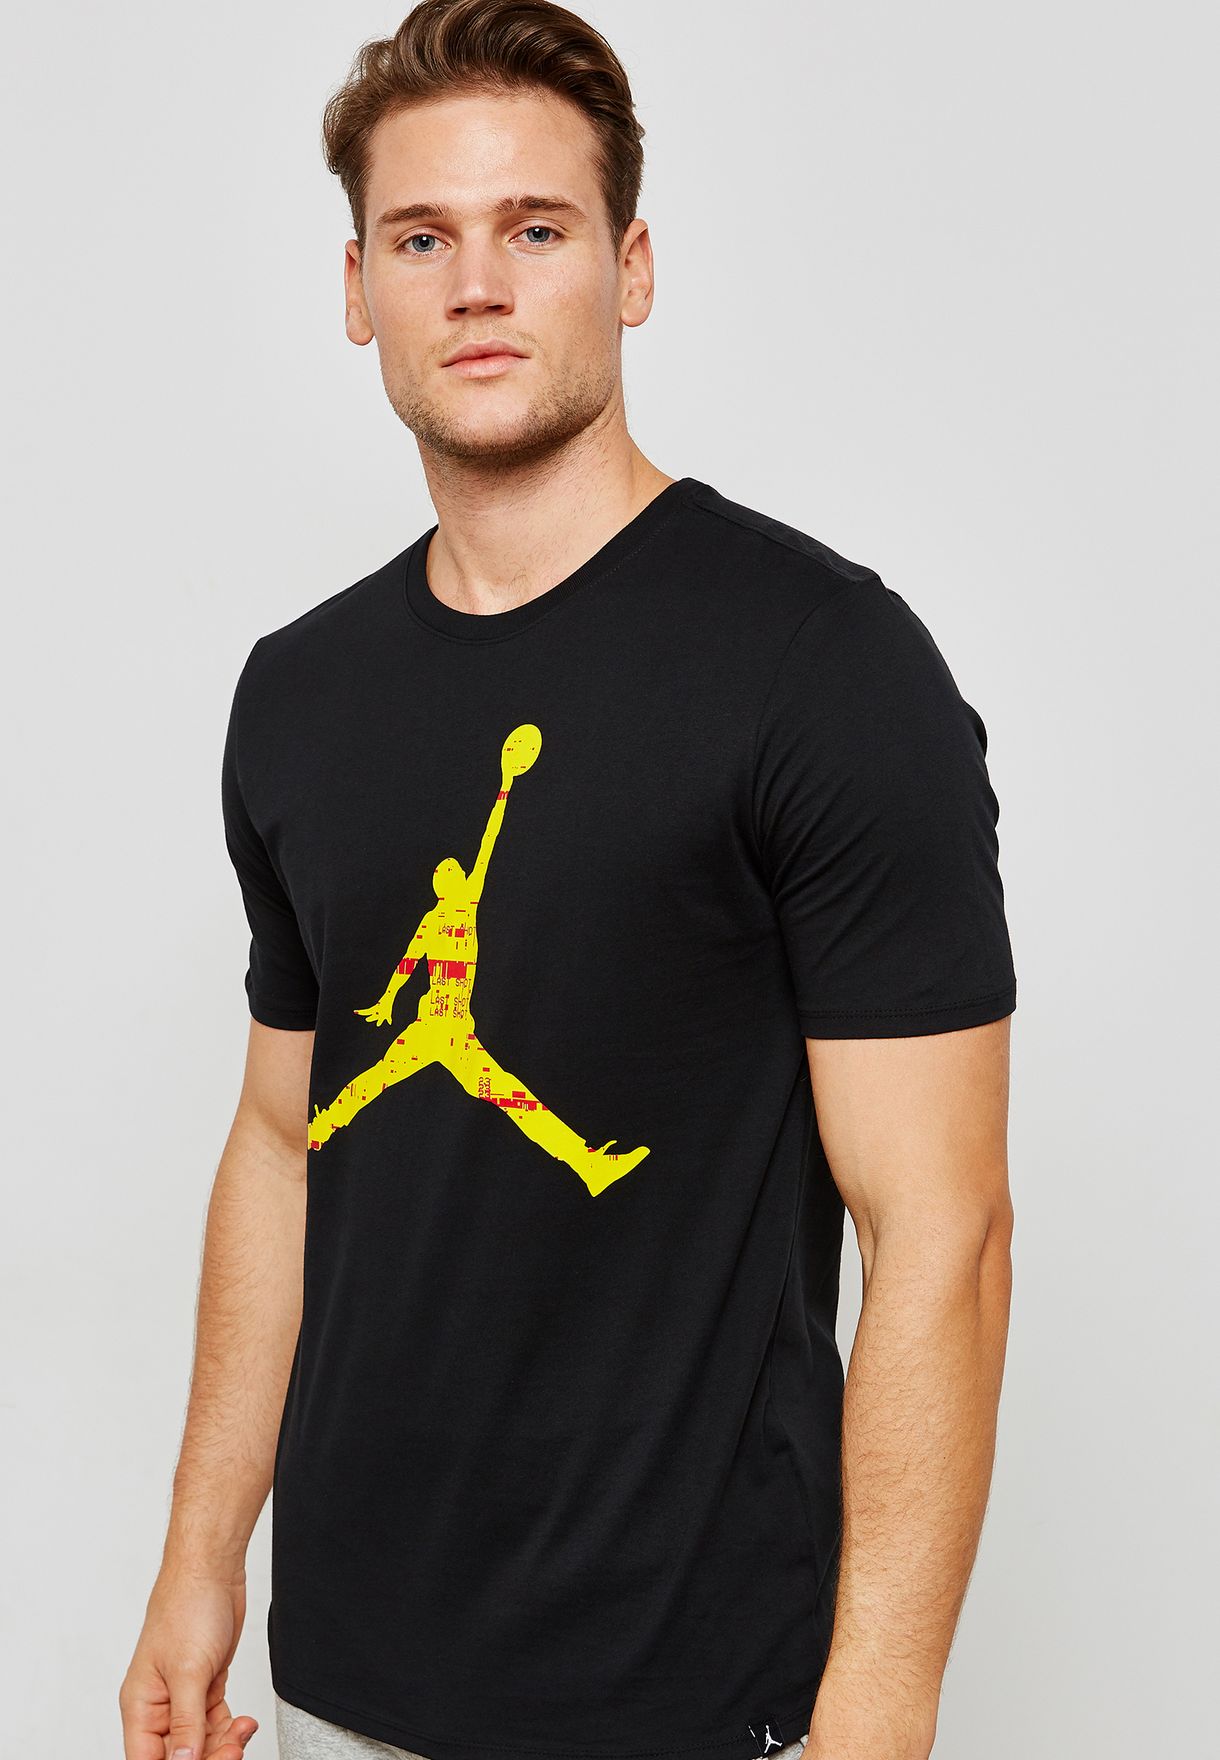 black and yellow jordan shirt